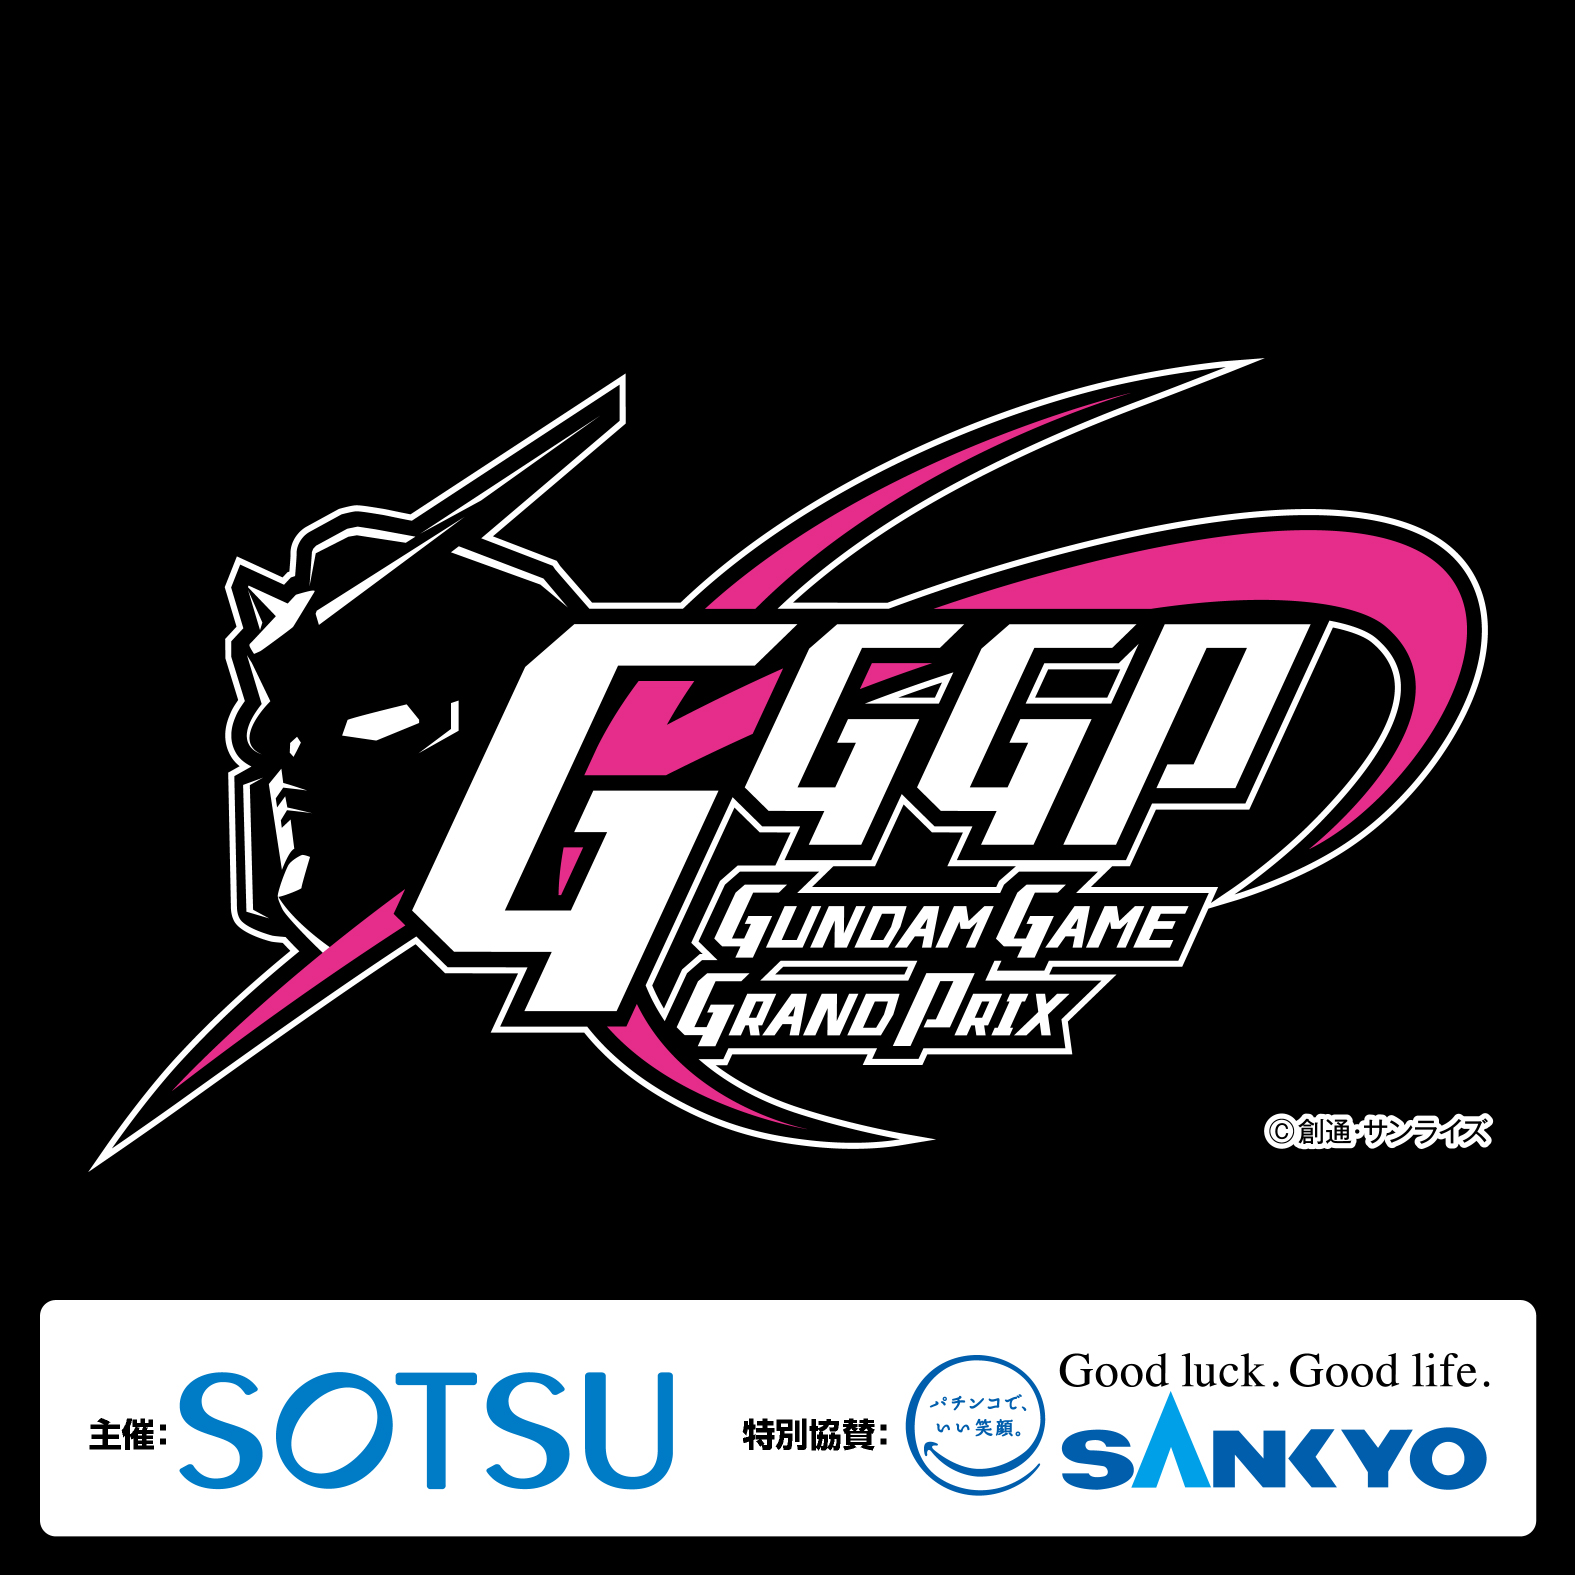 Gggp初のオンライン開催 賞金総額は300万円 開催を記念してのオンラインプレマッチでは足立梨花が選手たちにエール 株式会社創通のプレスリリース